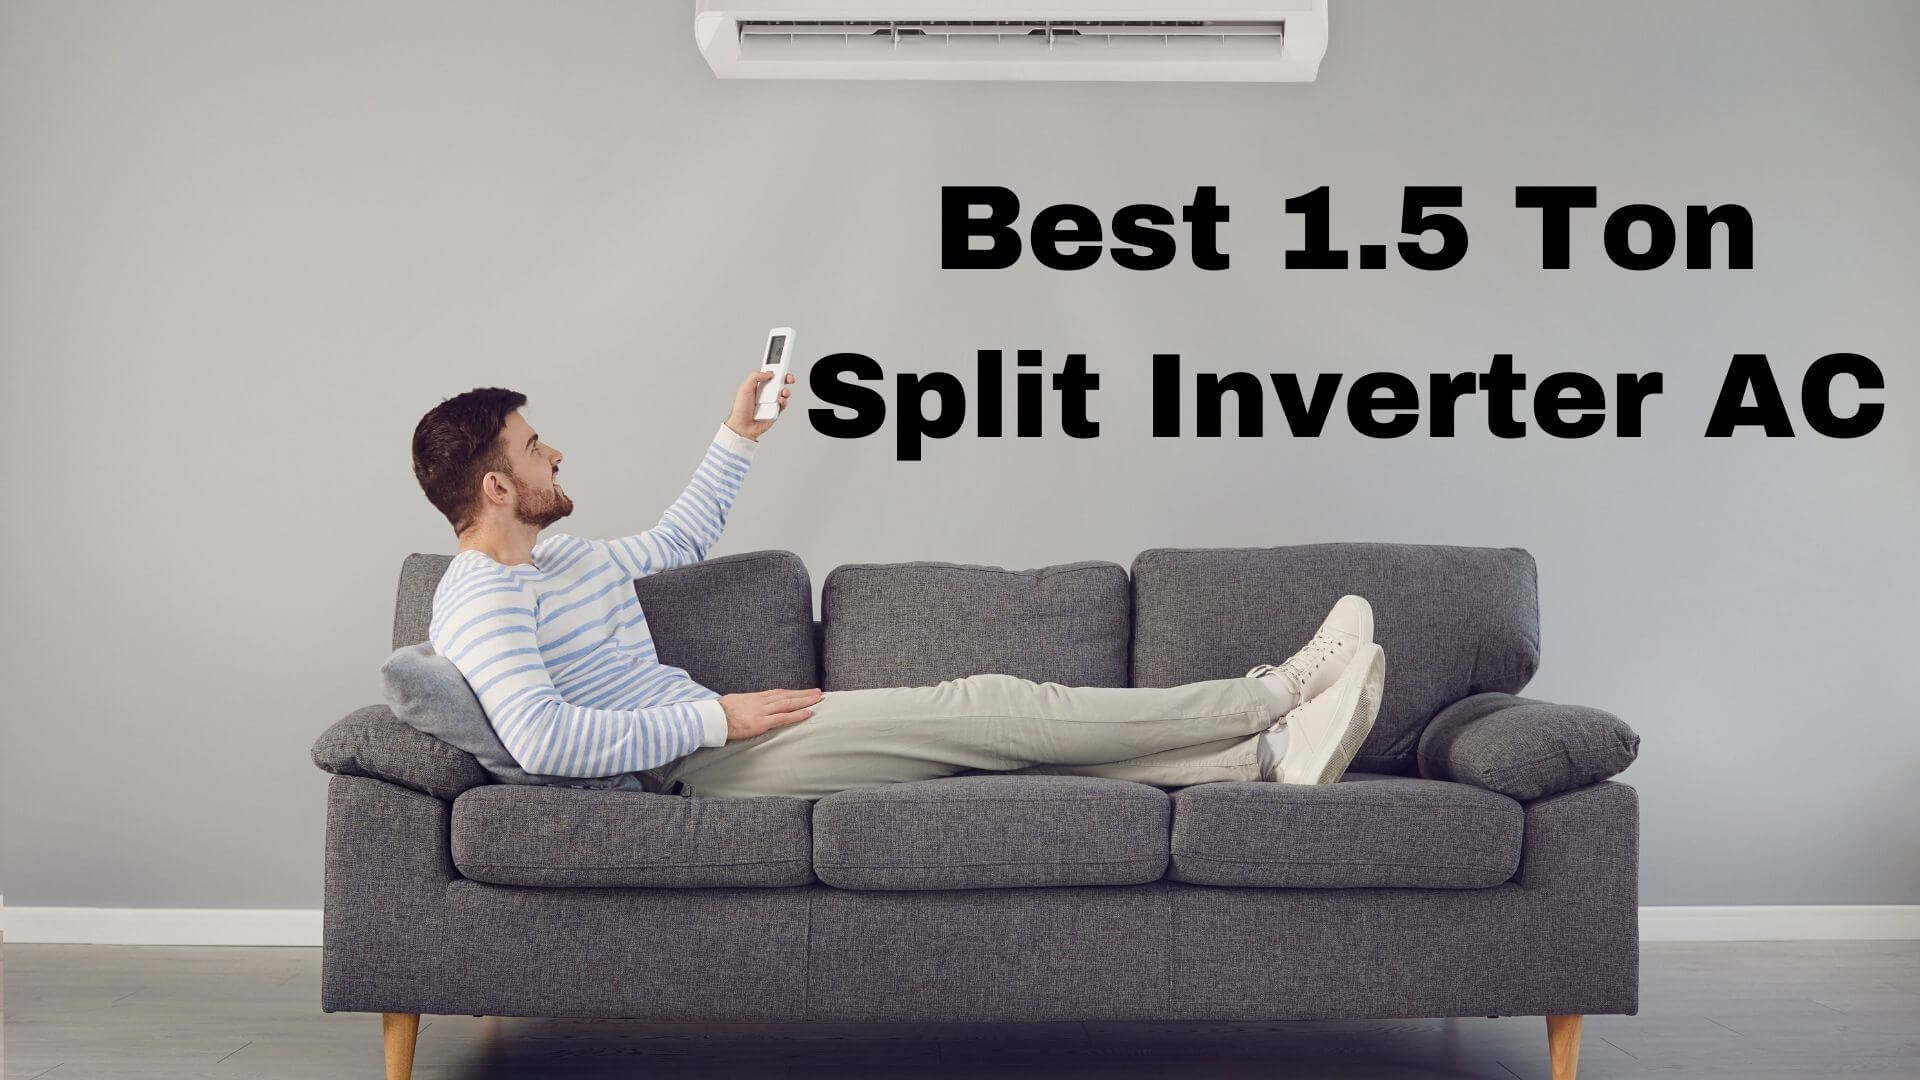 Best 1.5 Ton Split Inverter AC